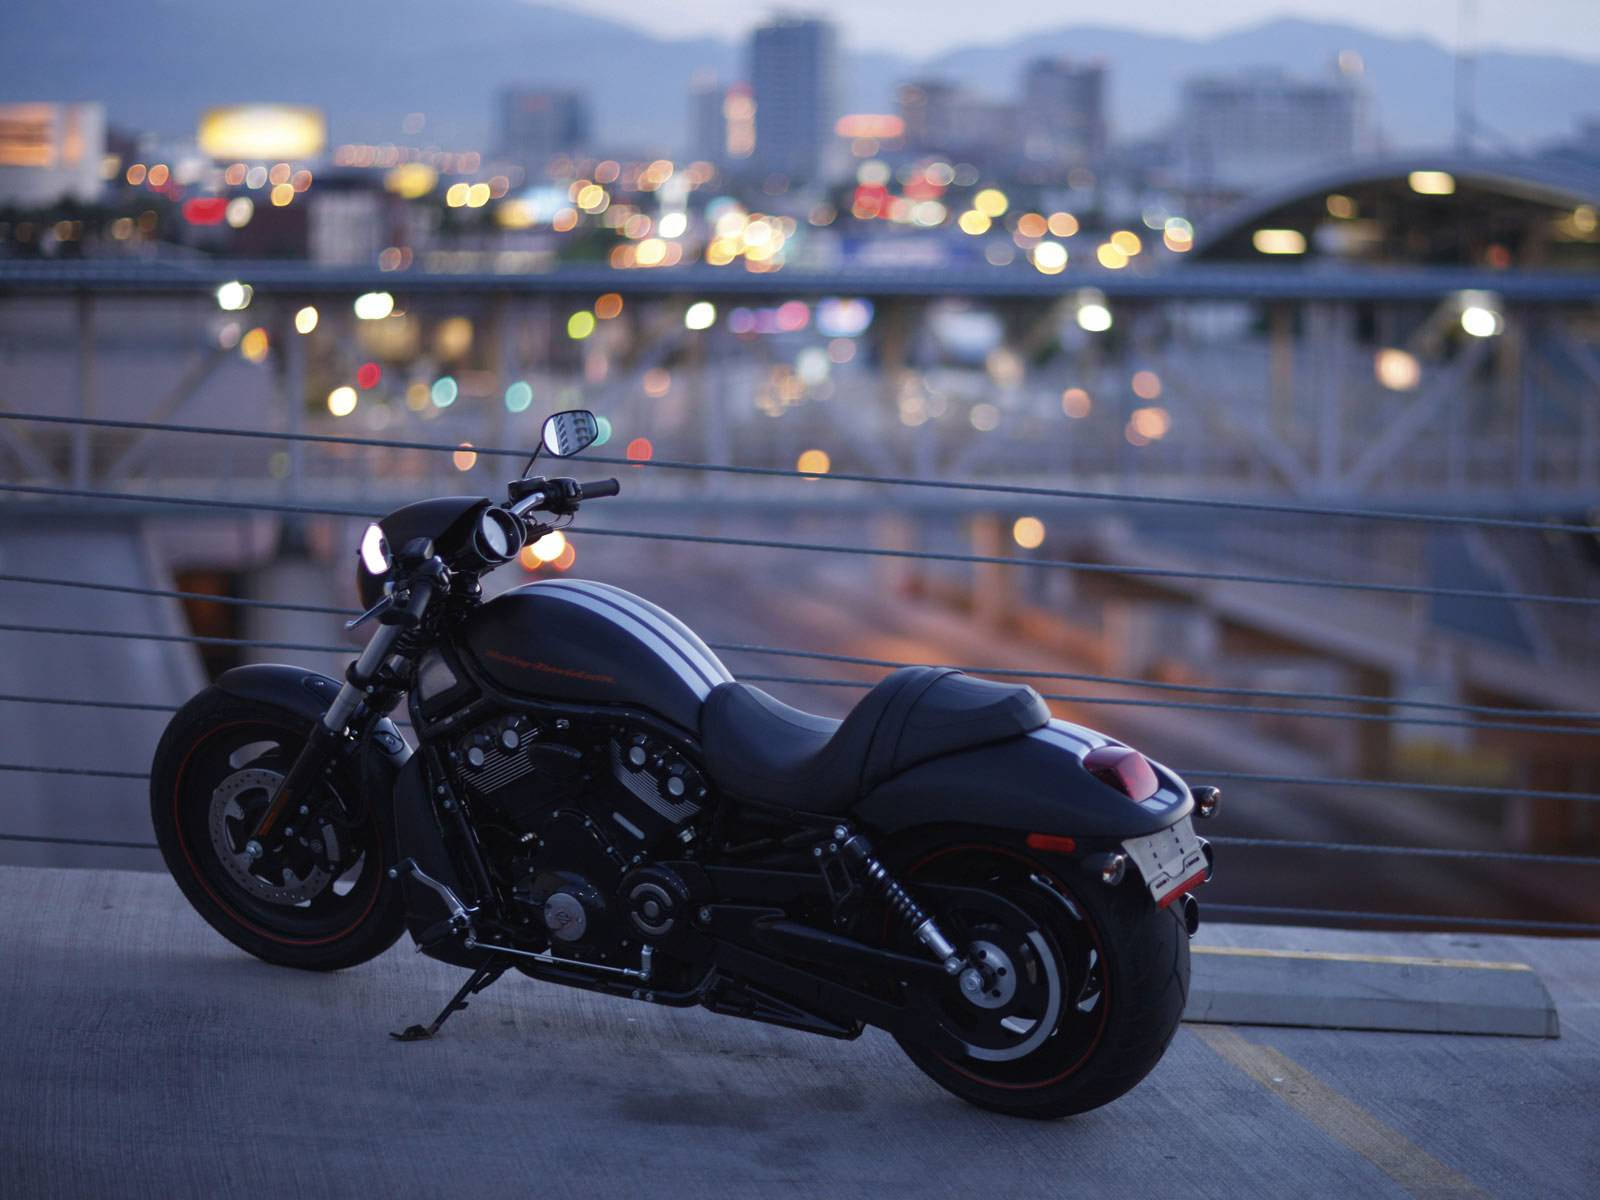 Harley Davidson In Blurred Background